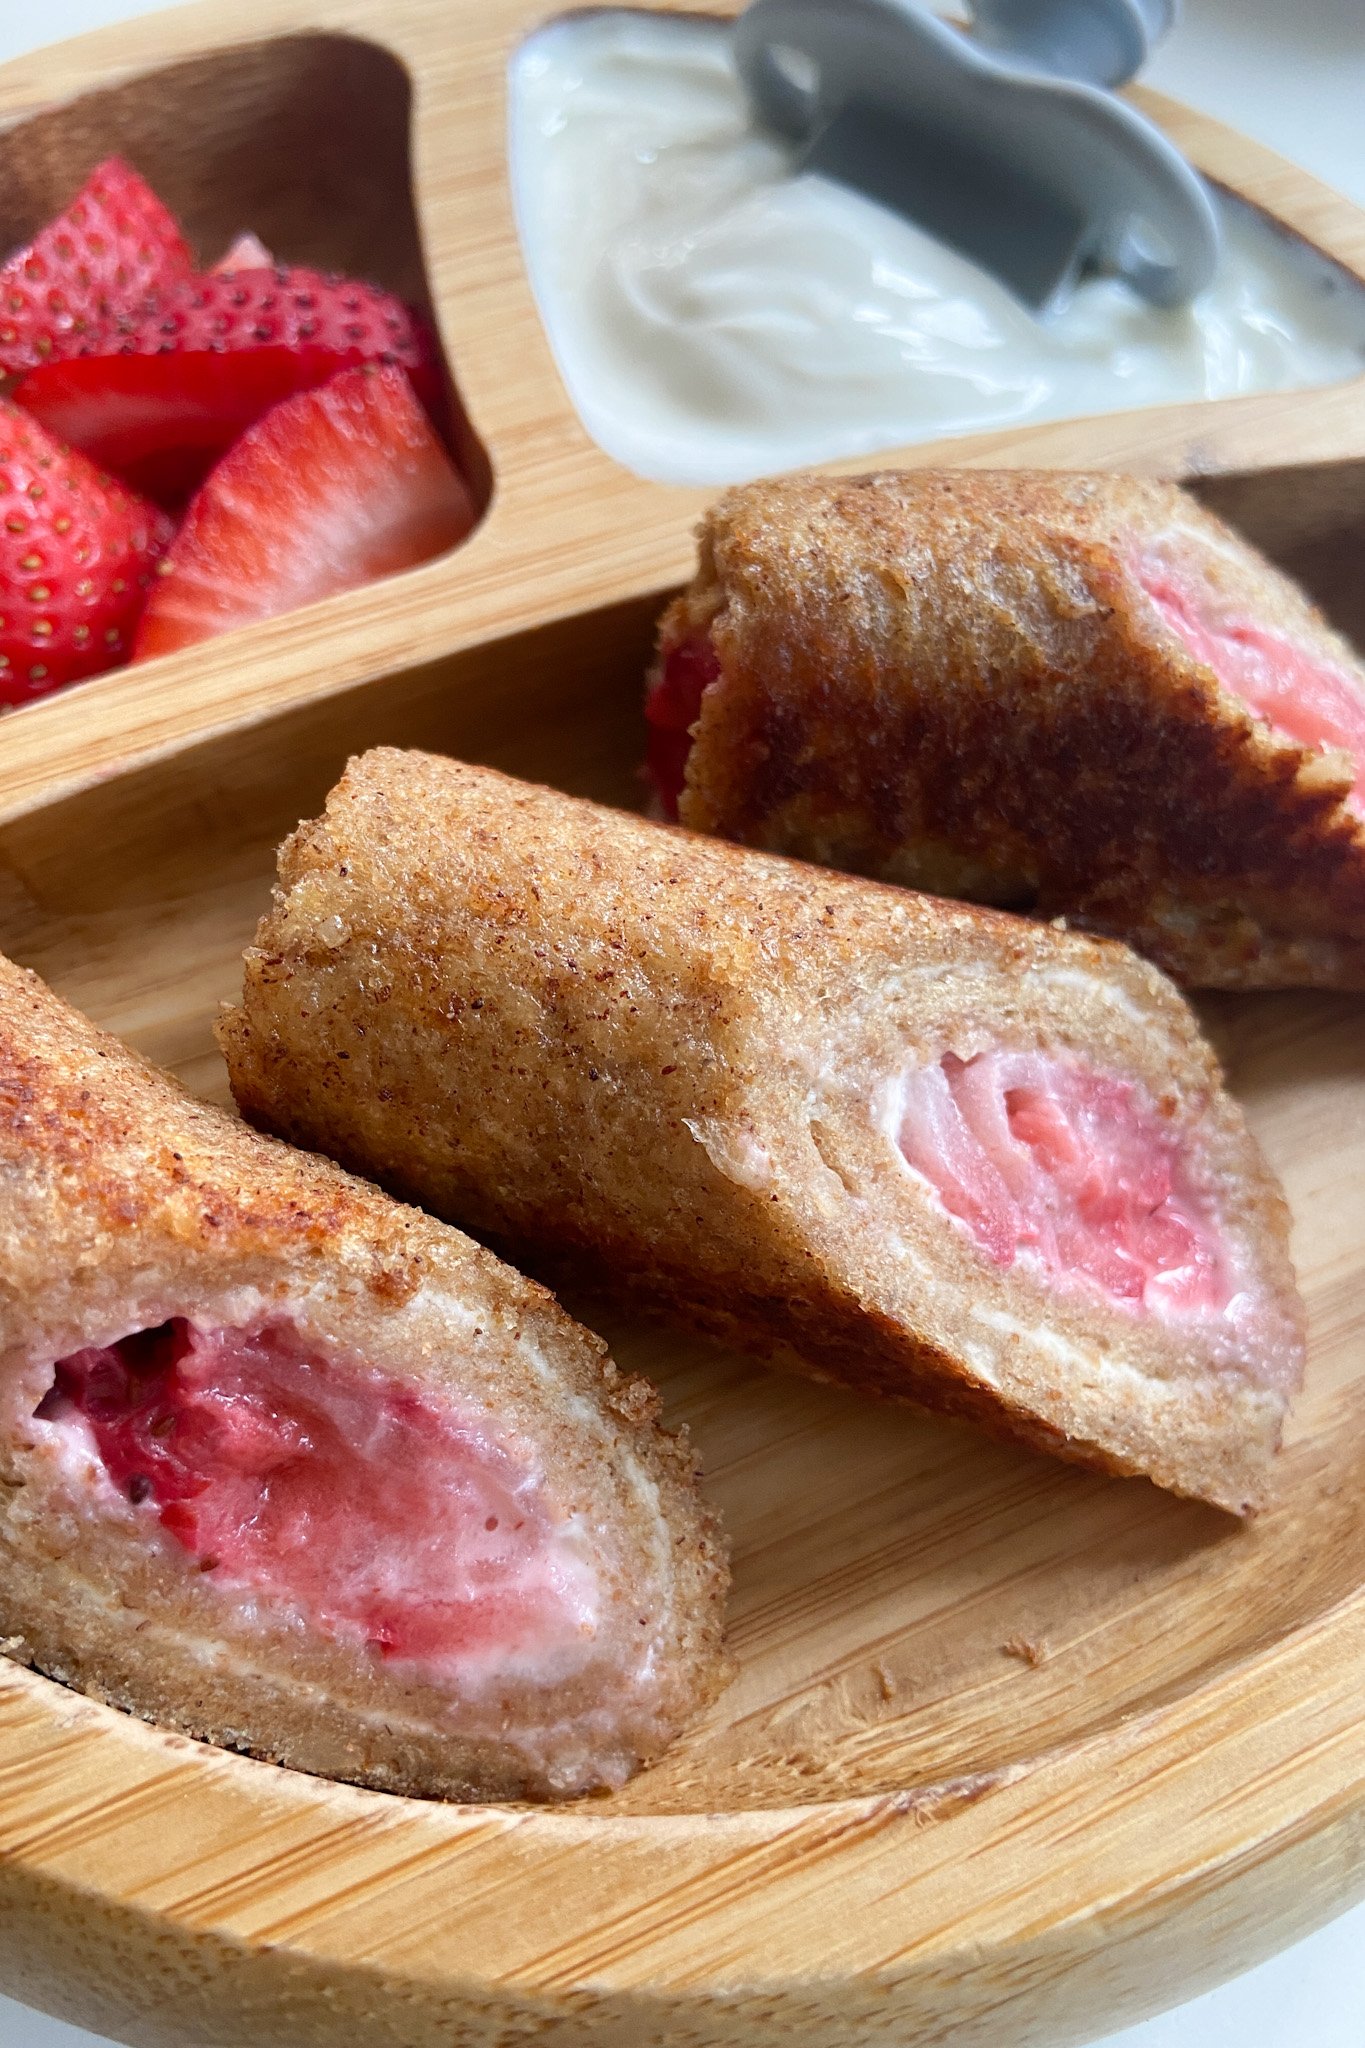 Strawberry cheesecake rollups served with sliced strawberries and yogurt